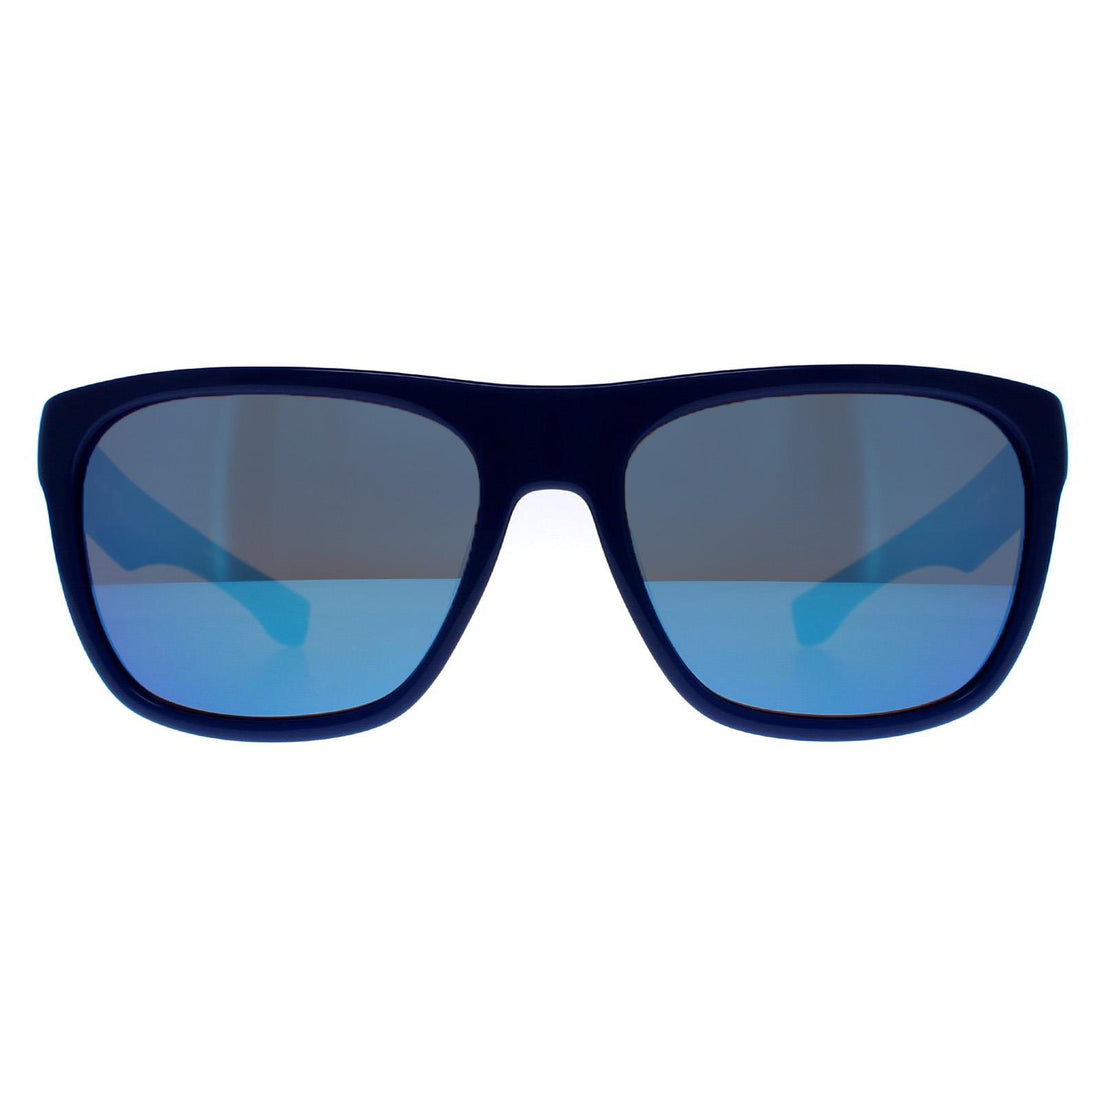 Lacoste Sunglasses L664S 414 Medium Blue Blue